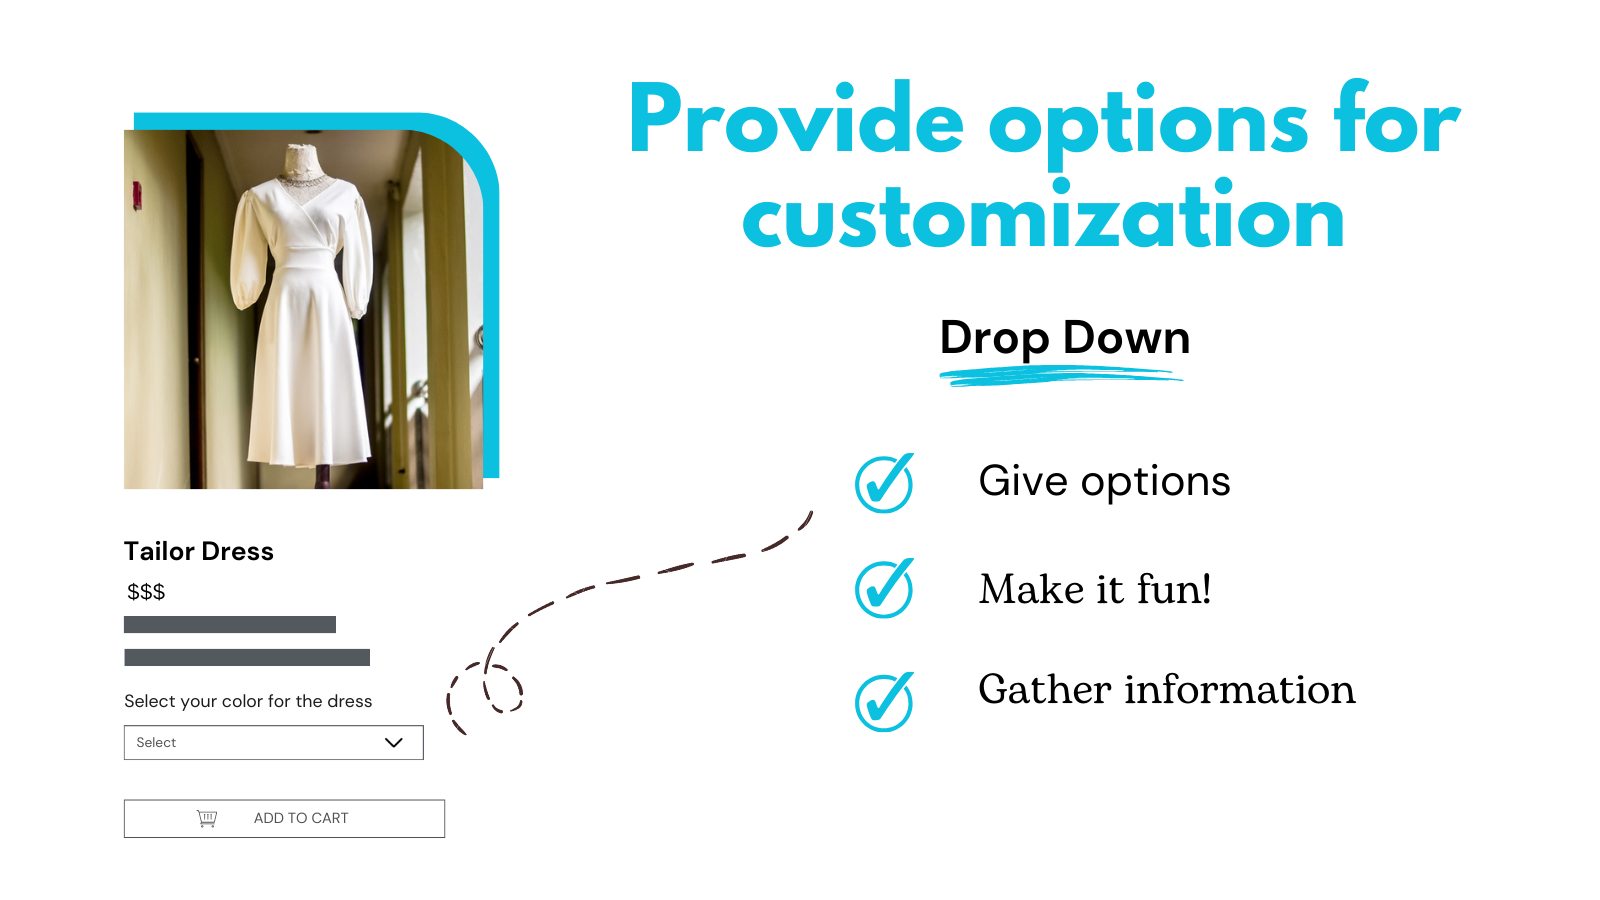 Provide options for customization by custom fields | Custom name